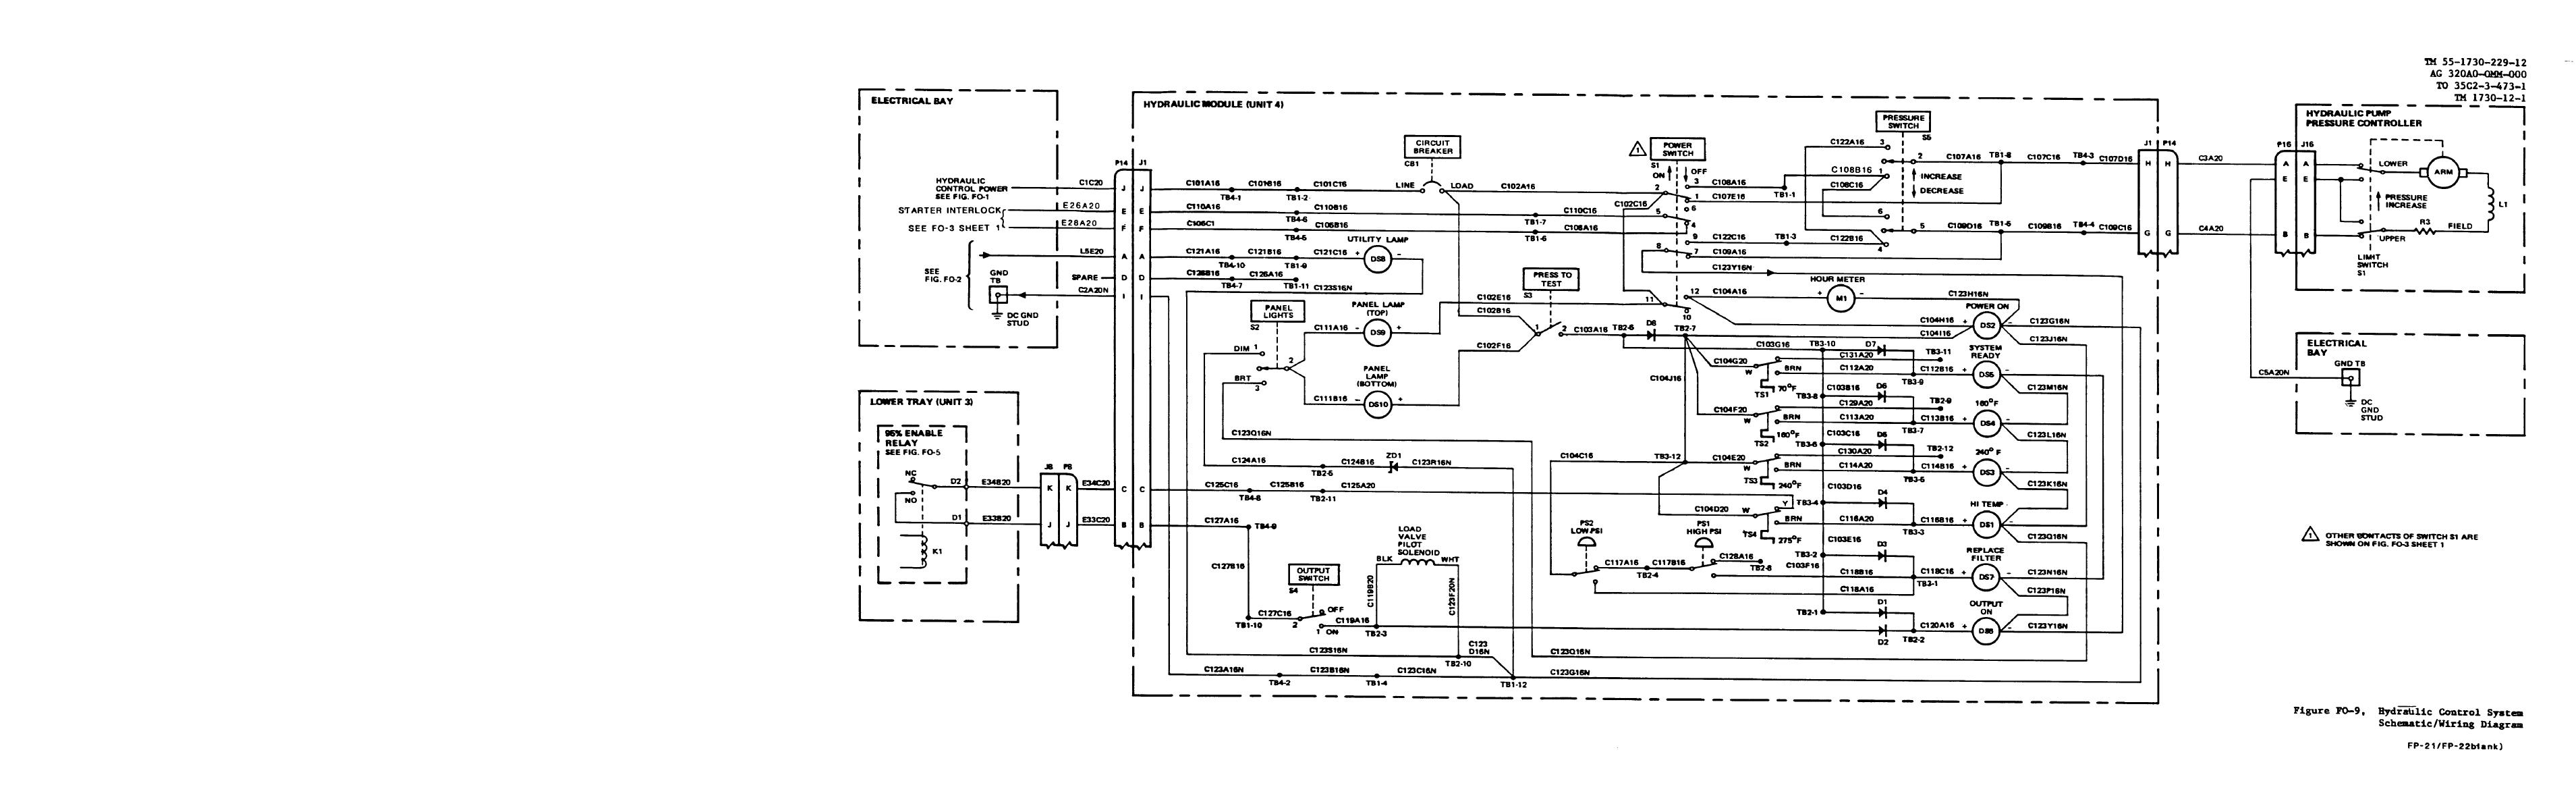 Figure FO-9. Hydraulic Control System Schematic/Wiring Diagram